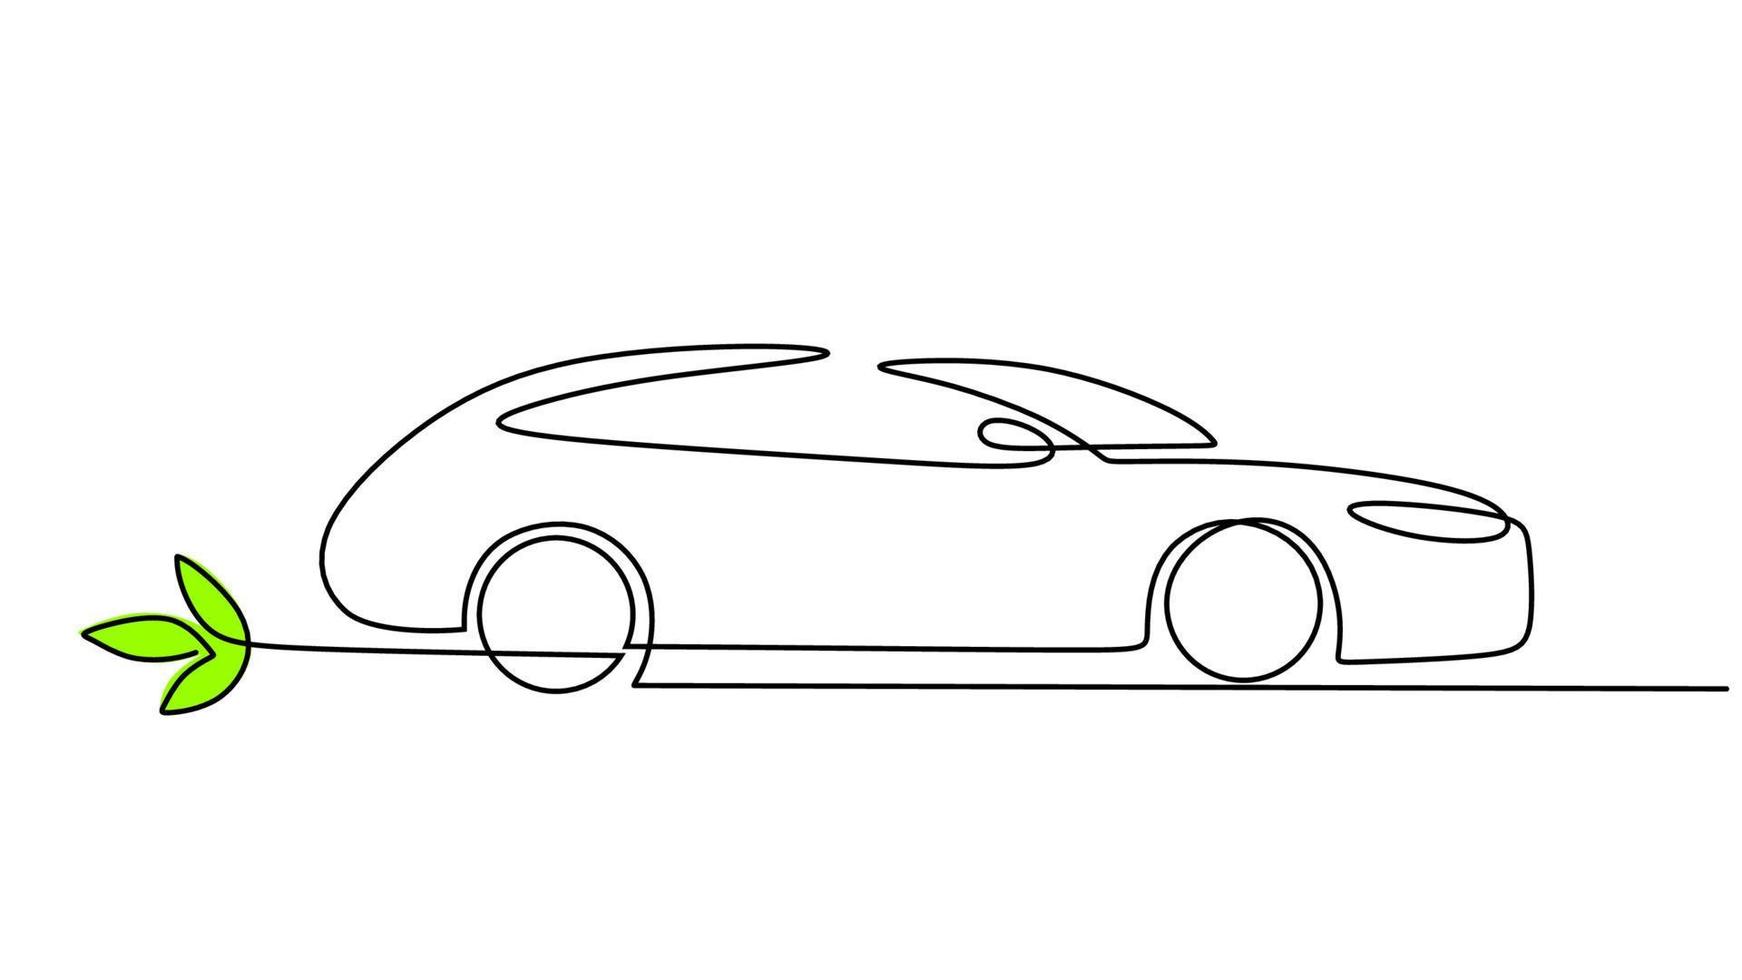 ett linje teckning av elektrisk bil isolerat på vit bakgrund. kontinuerlig enda linje minimalism. vektor